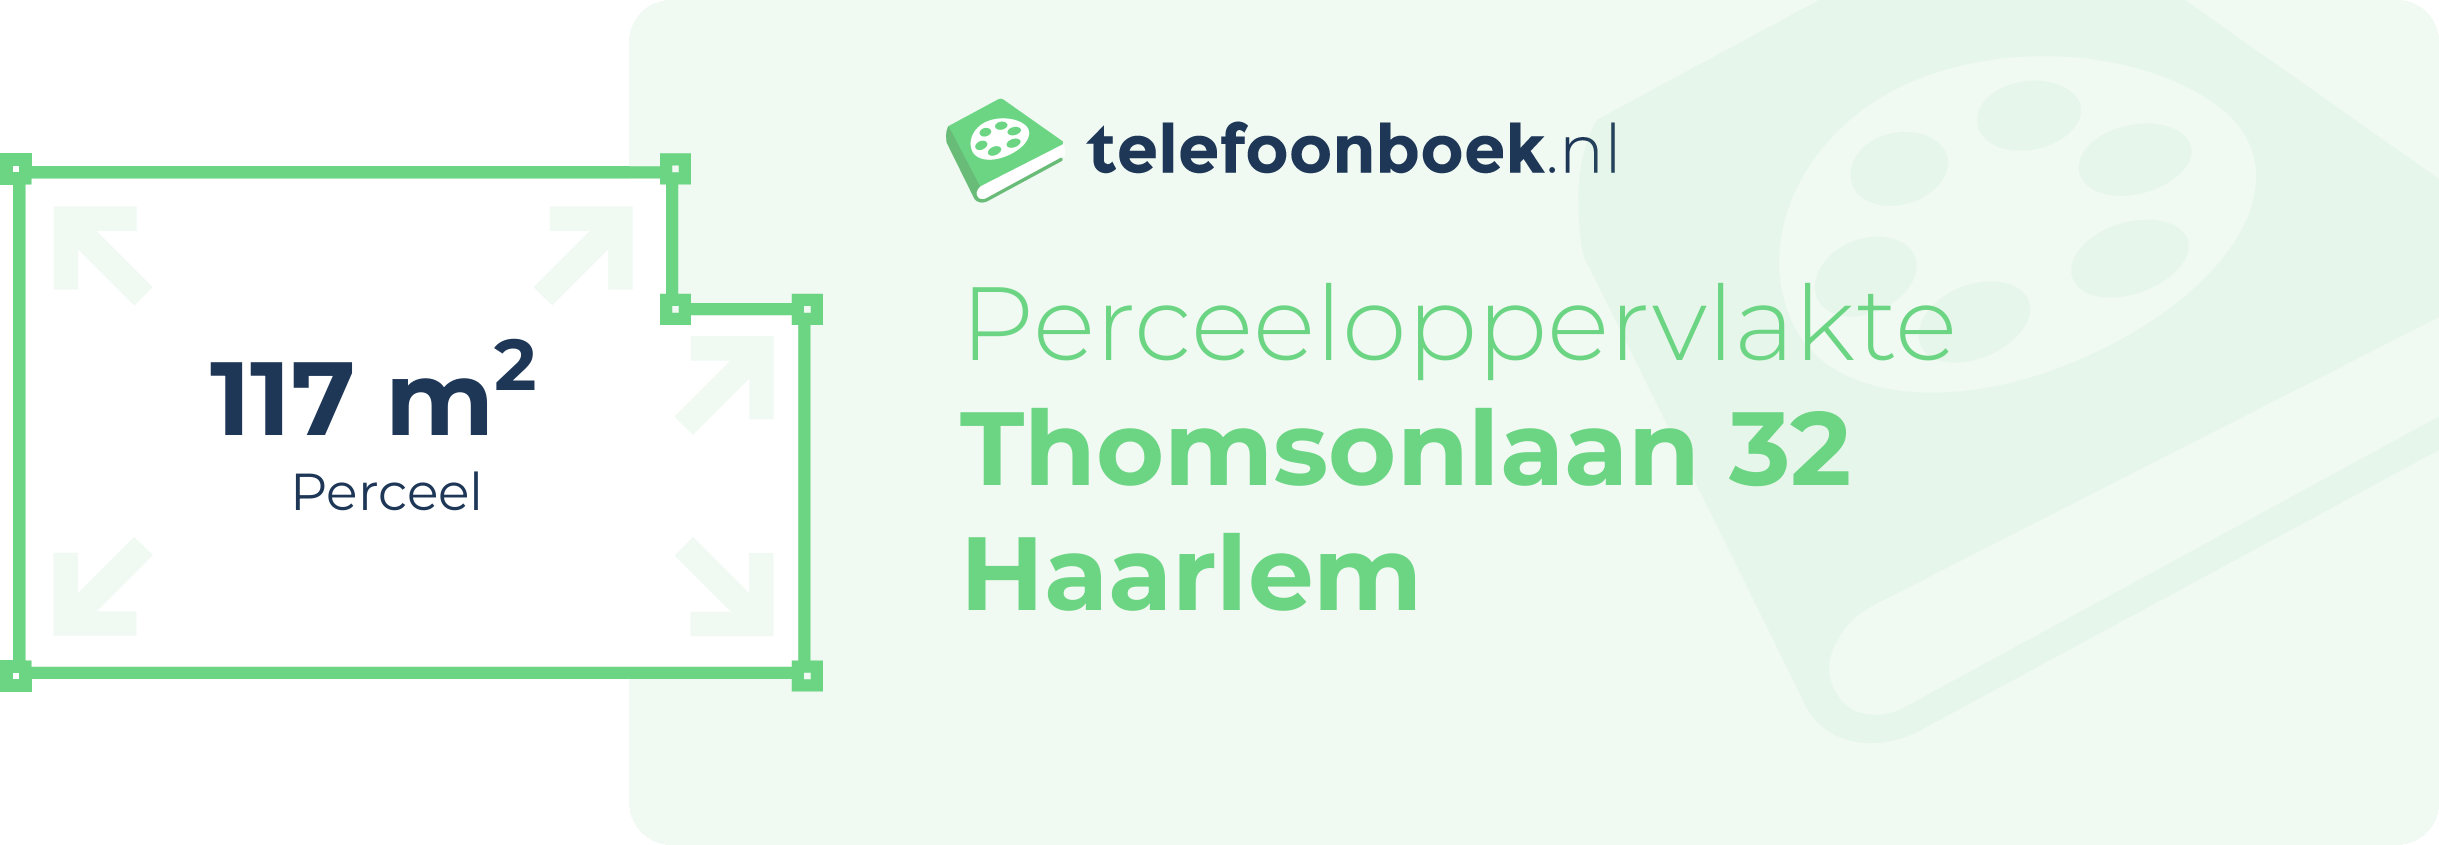 Perceeloppervlakte Thomsonlaan 32 Haarlem